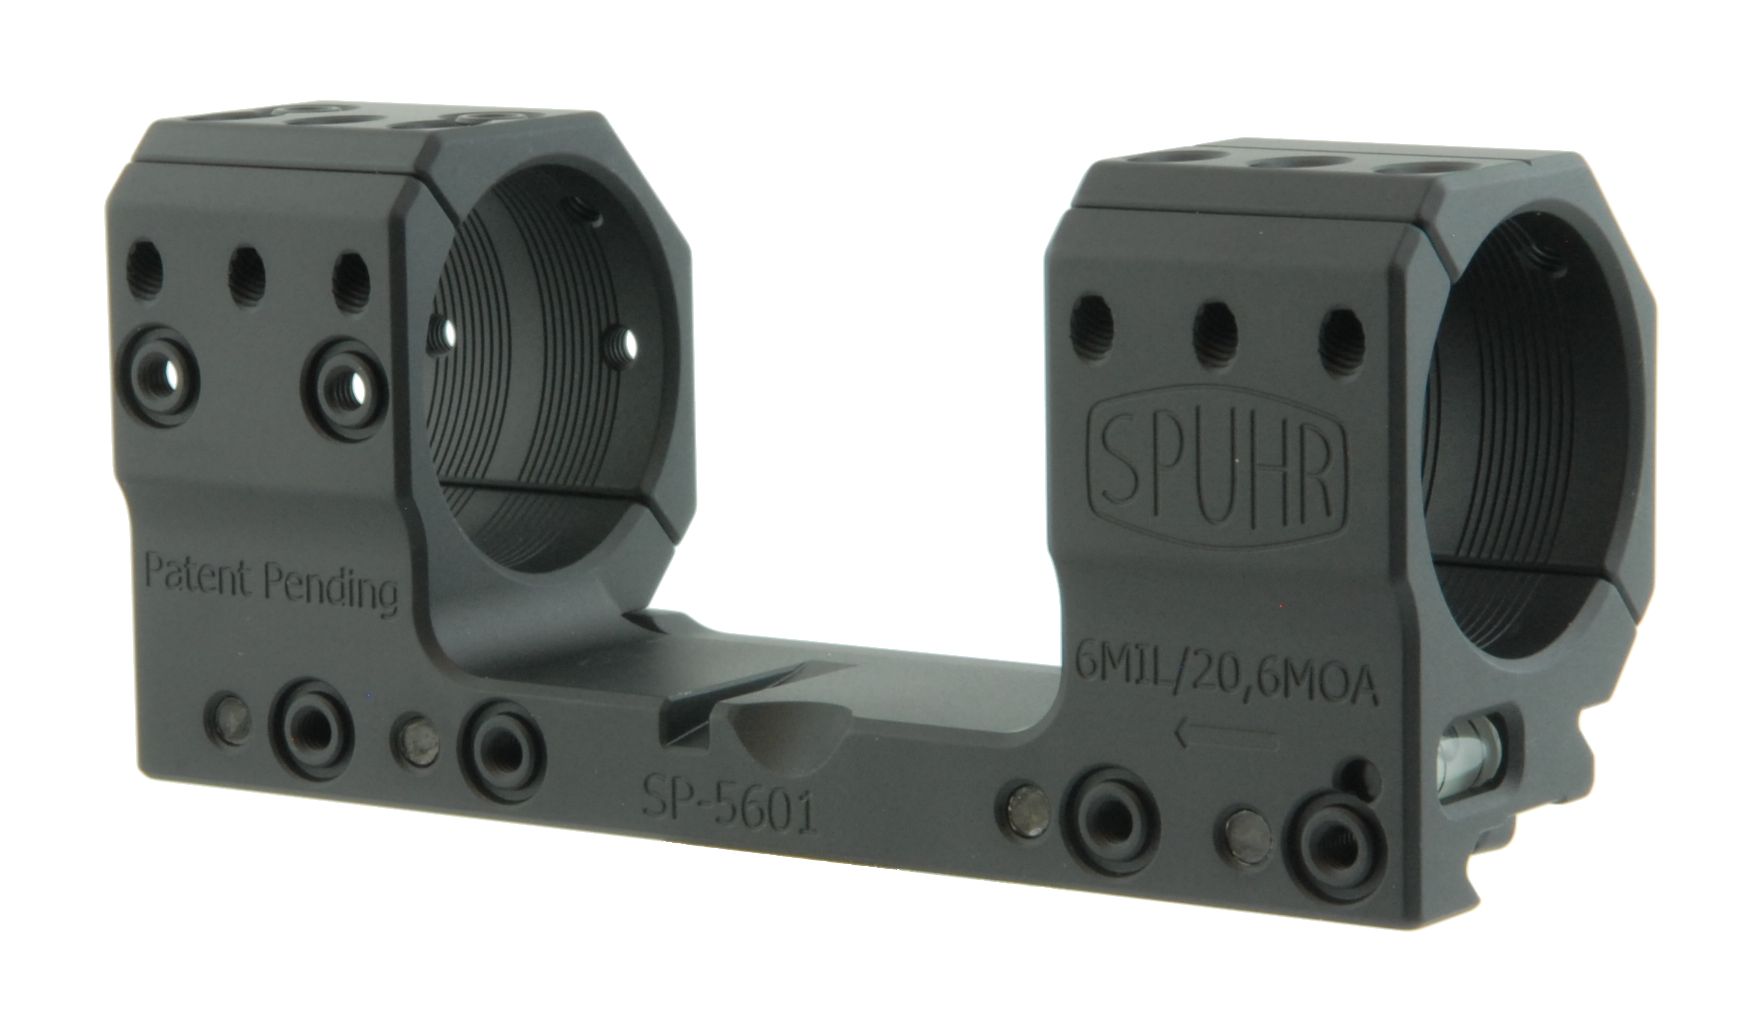 Тактический кронштейн SPUHR D35мм для установки на Picatinny, H30мм, наклон 6MIL/ 20.6MOA (SP-5601)